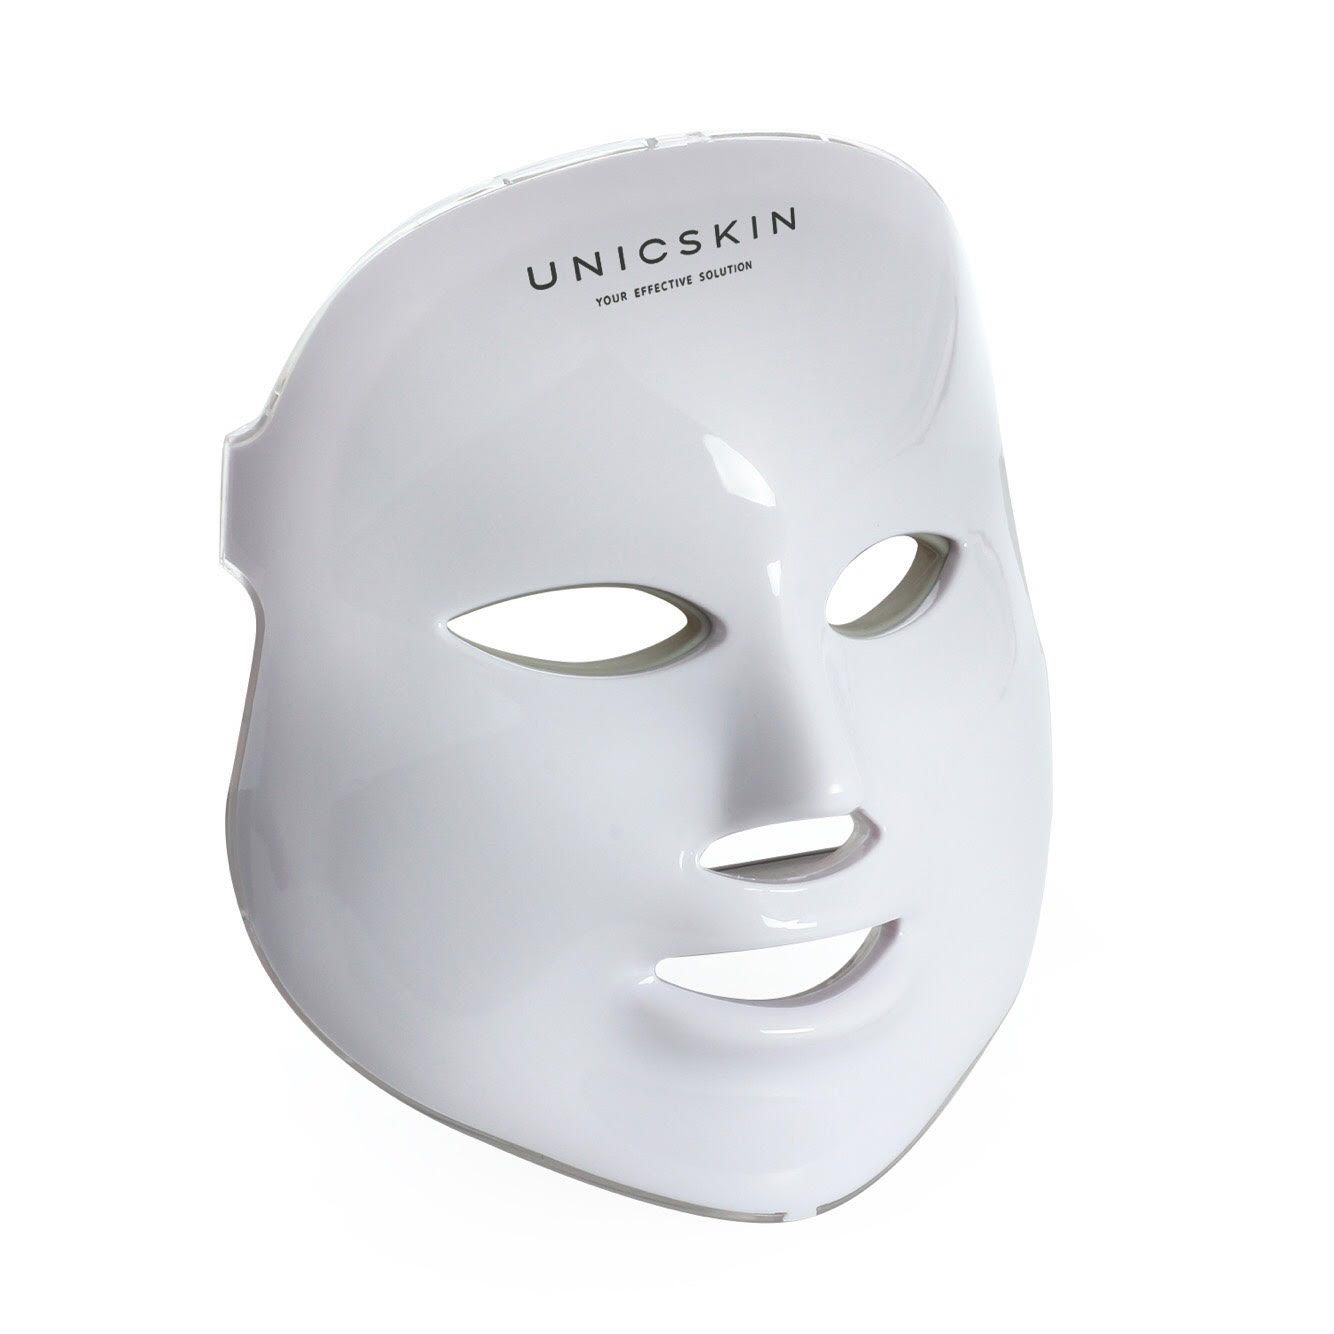 Conoces la máscara Unicskin Unicled Korean Mask?http://localhost:62706/manager/content/save/393?type_id=2#nav-es-ES